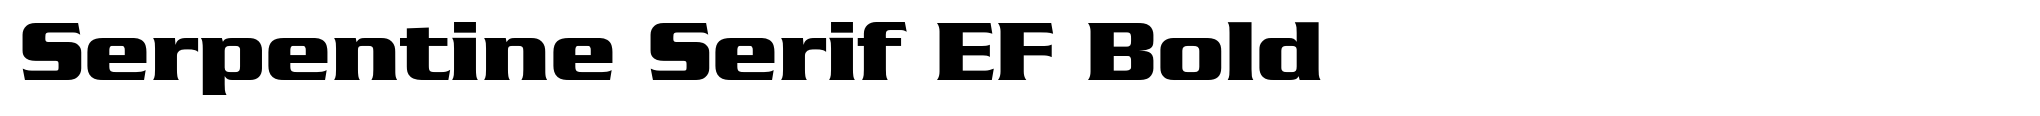 Serpentine Serif EF Bold image